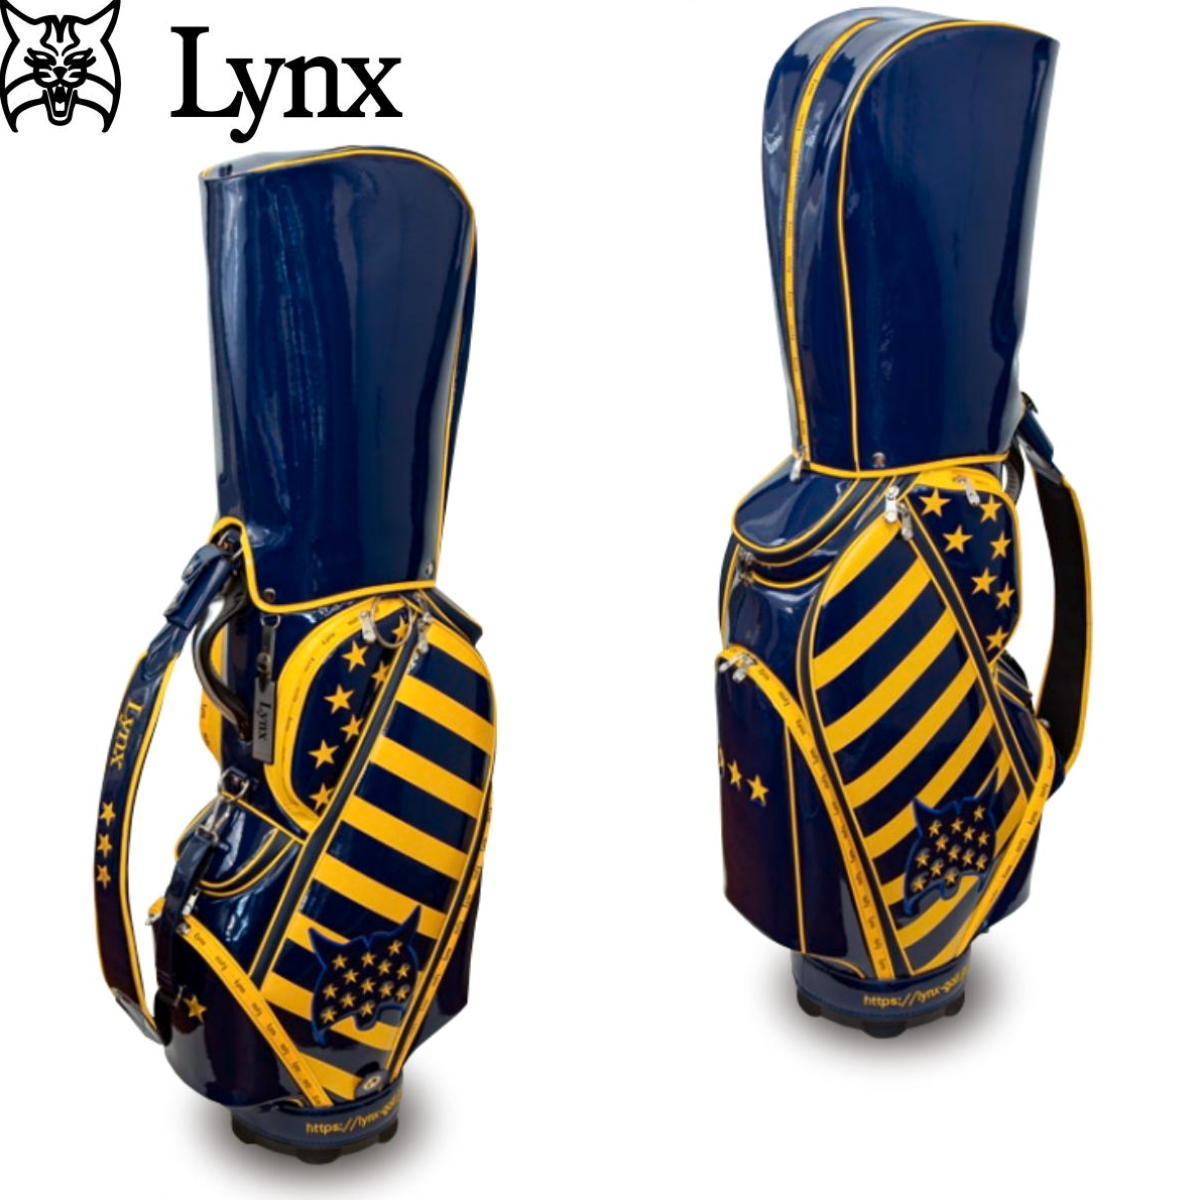 ★Lynx リンクス LXCB-66 アメリカンフラッグシップ ツアーバッグ (ネイビー) 9型 キャディバッグ★